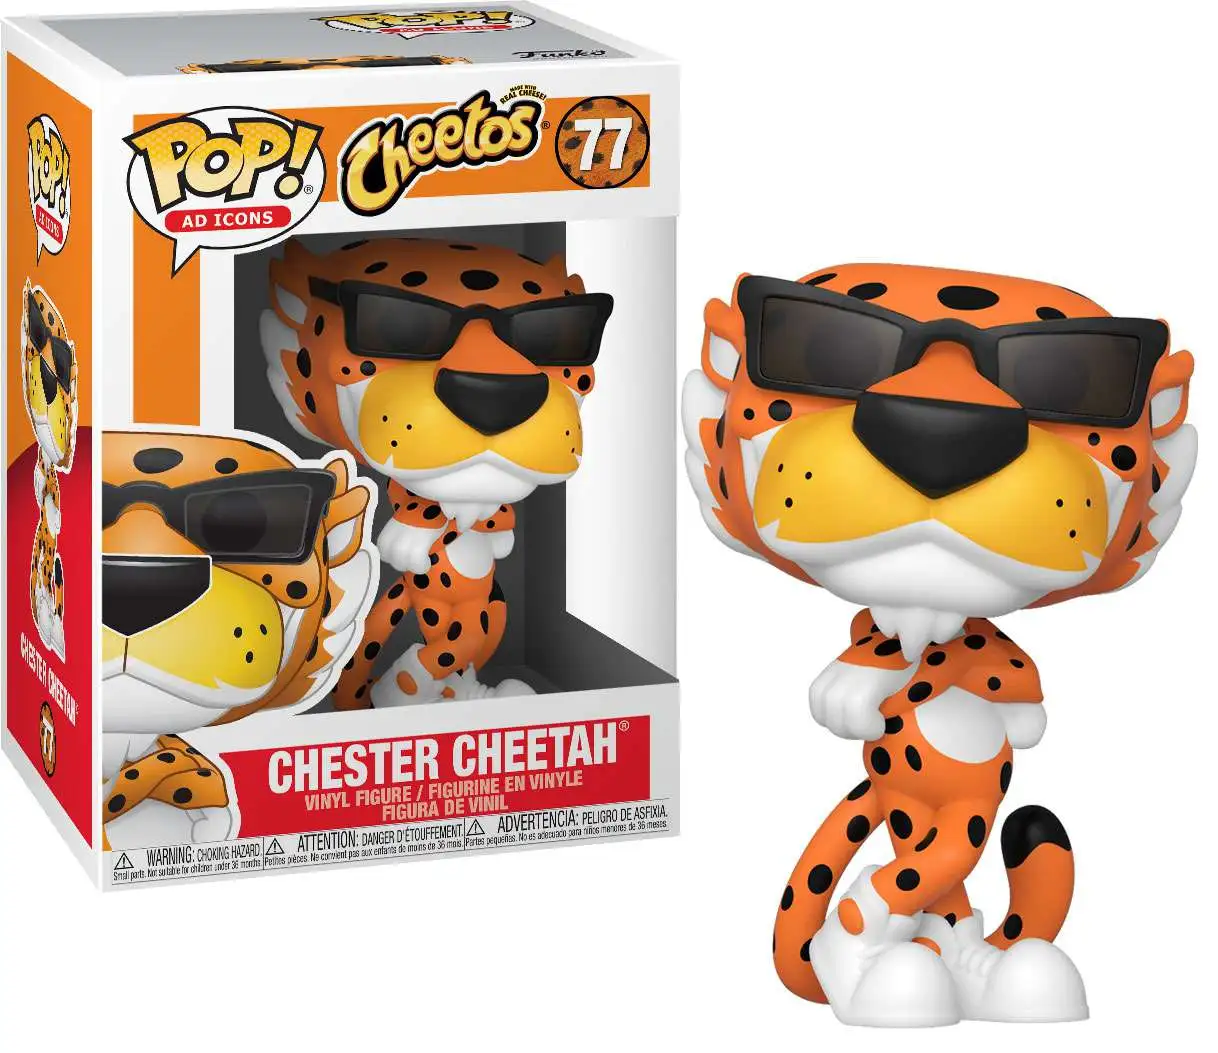 Cheetos Chester Cheetah Standing Ad ICON Vinyl POP Figure Toy #77 FUNKO NEW MIB 